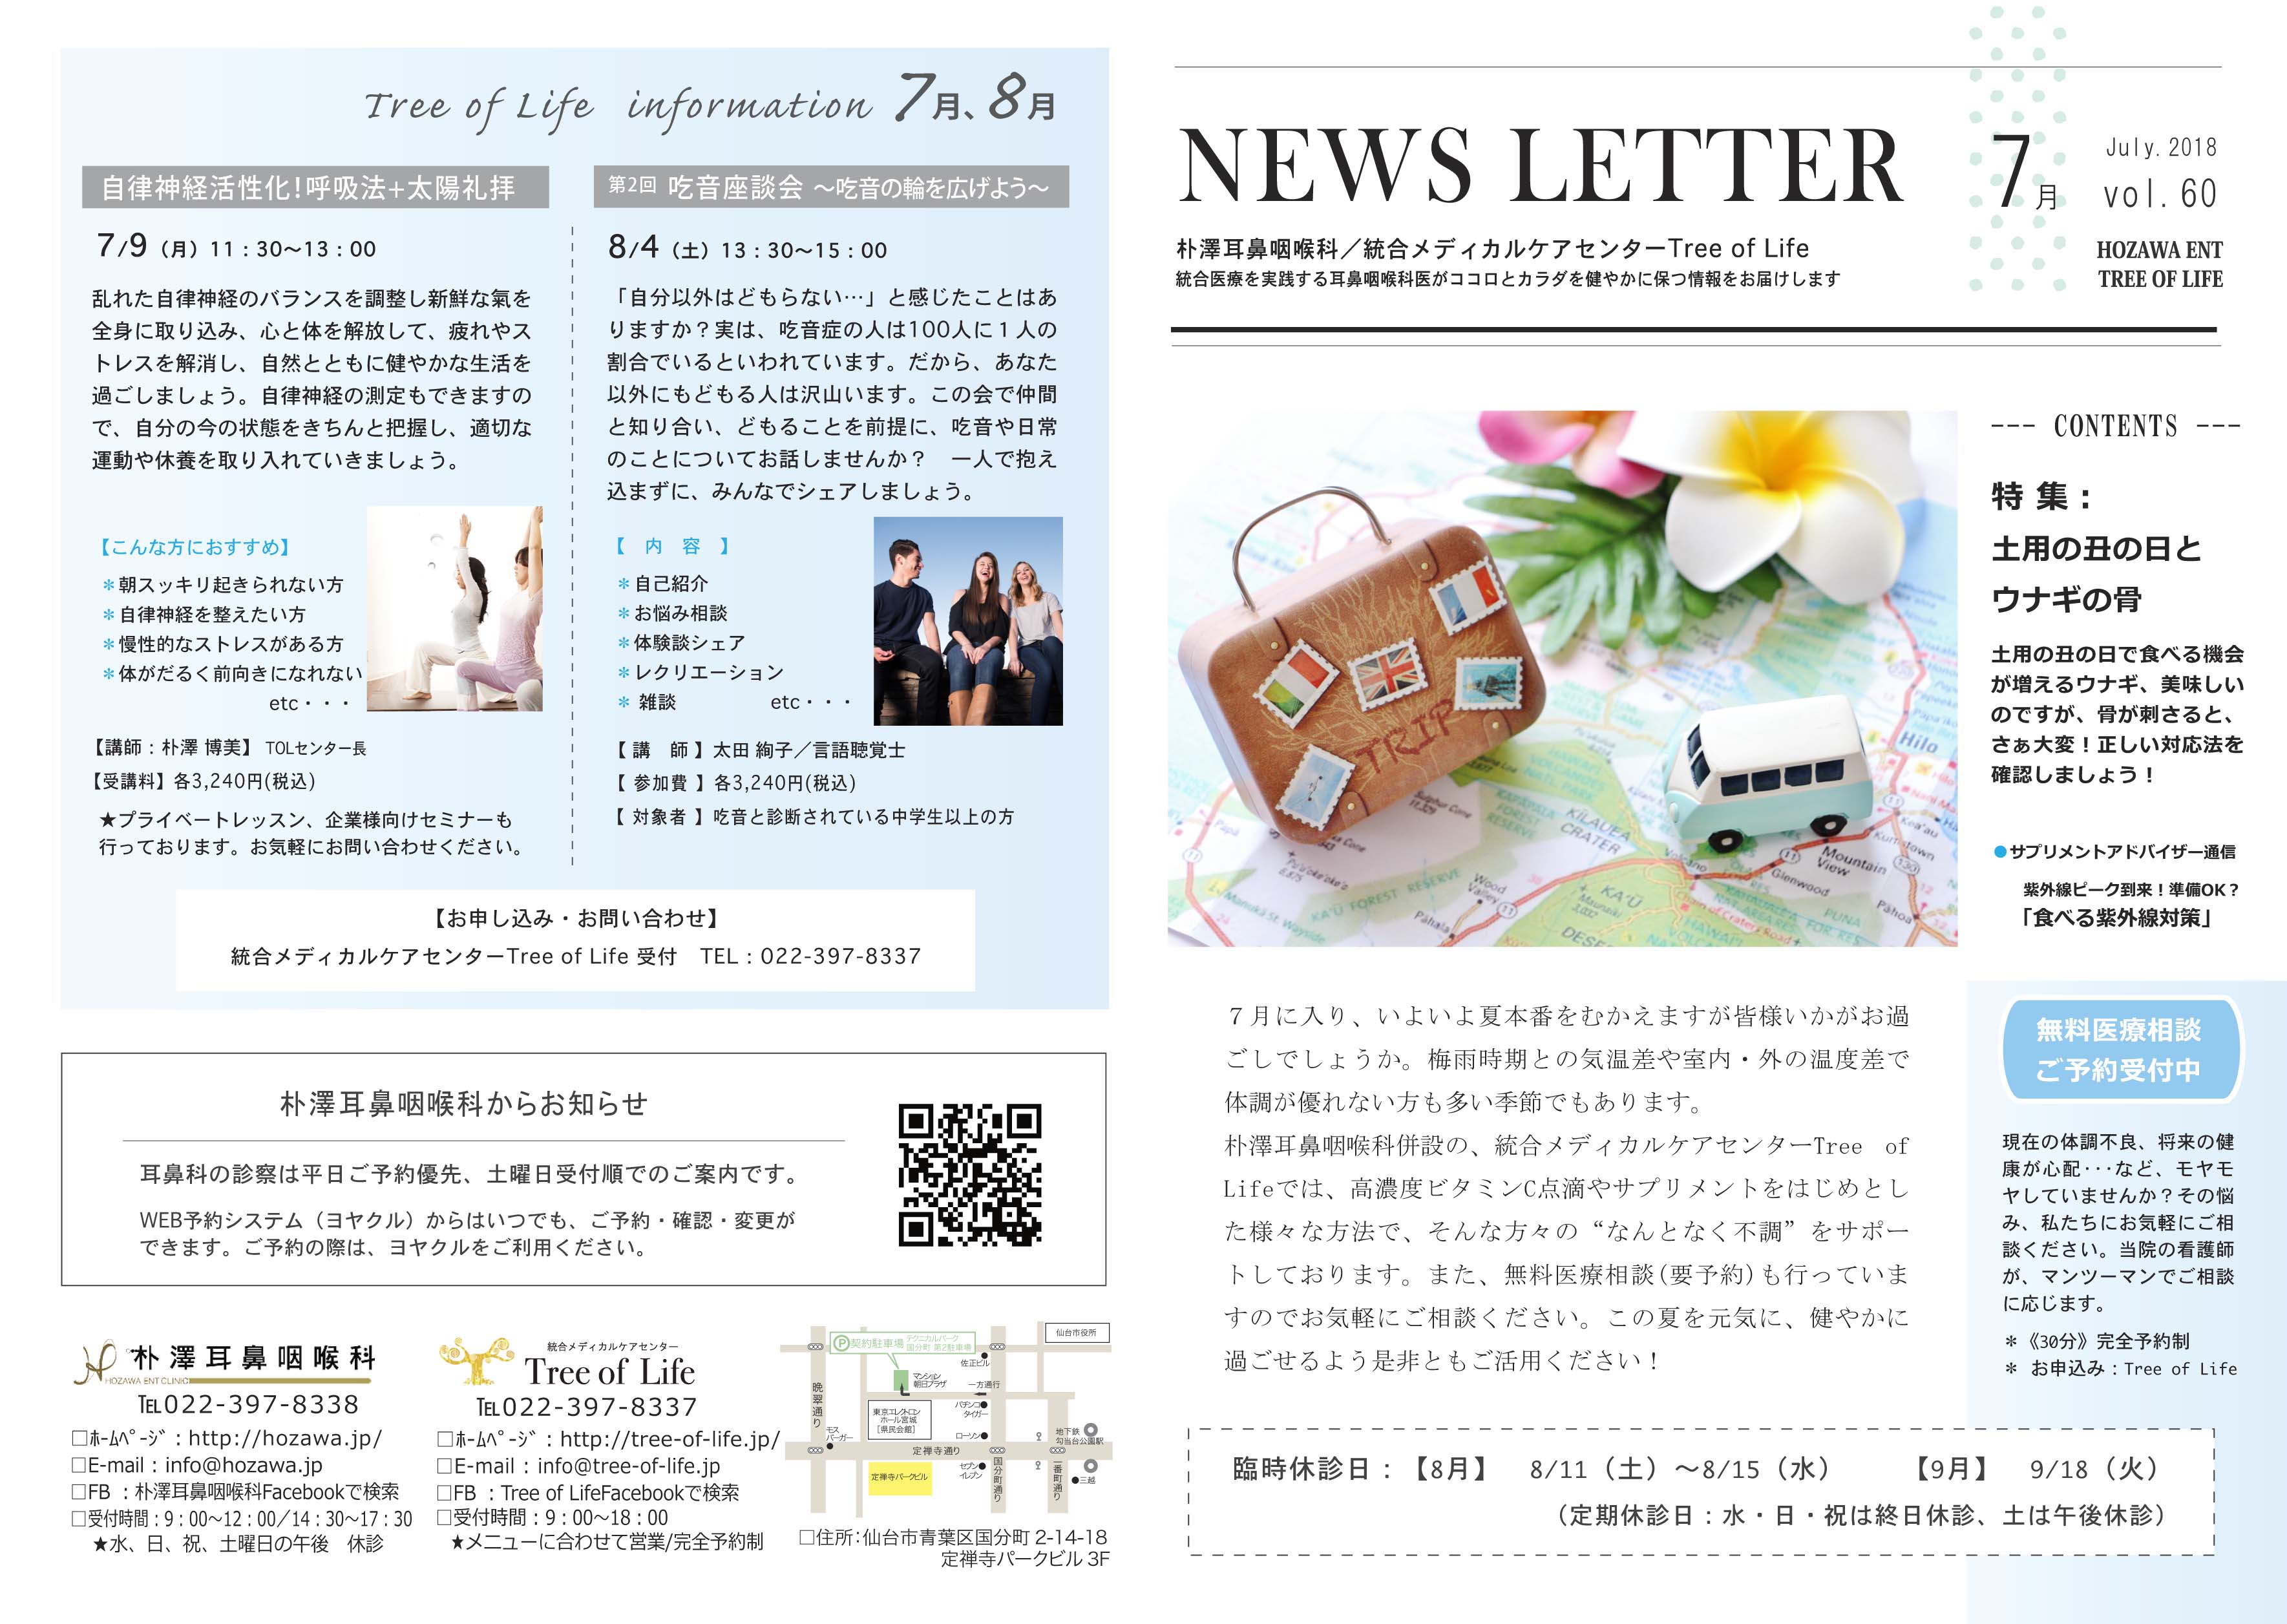 http://hozawa.jp/news/news_img/newsletter_omote7.jpg